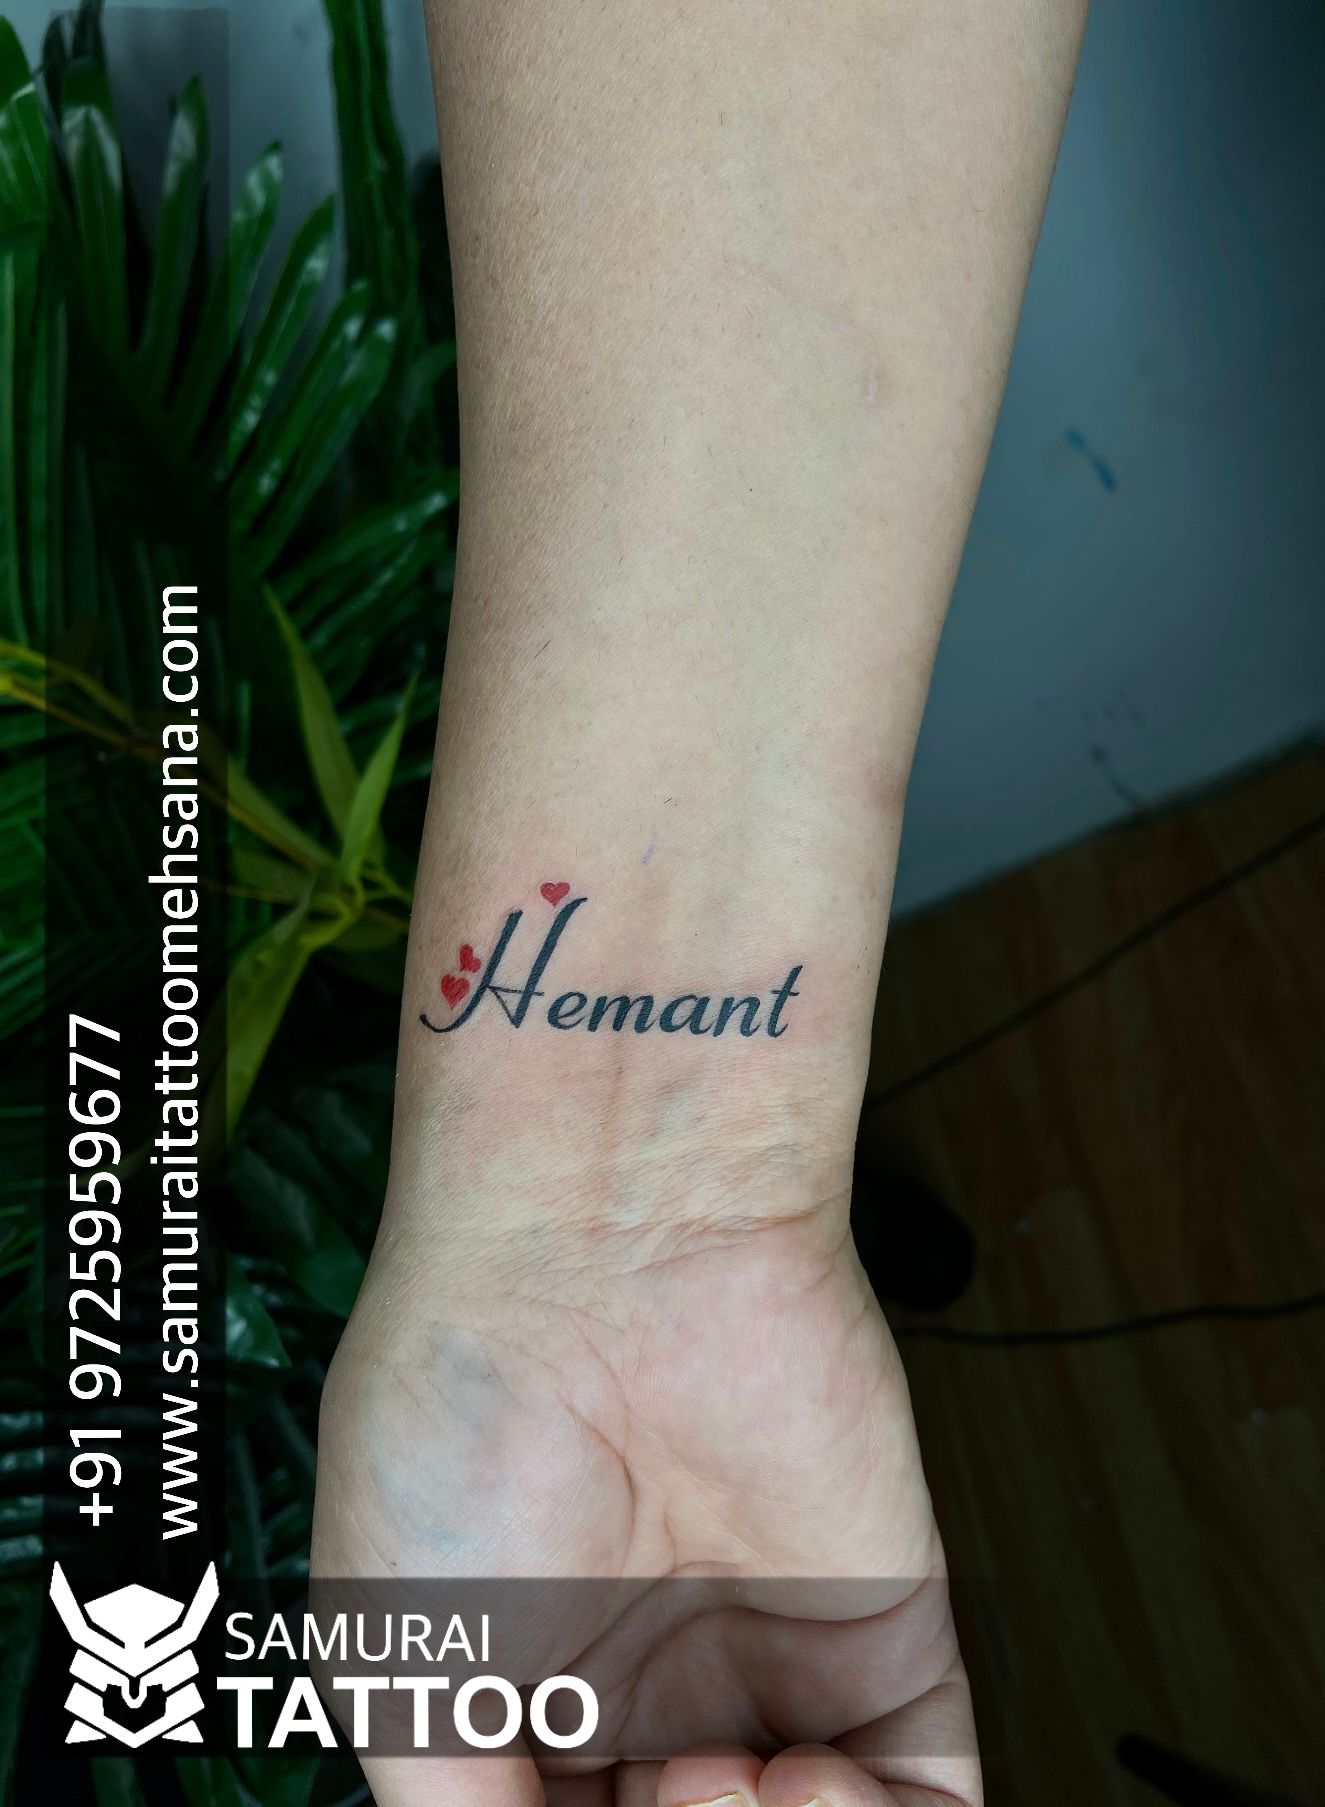 Name Tattoo | Name Tattoo Design | Flying Bird Tattoo | Wrist Tattoo | Hand  Tattoo| Crown Tattoo | Small Heart Tattoo | Name Tattoo | Name Tattoo  Design | Flying Bird